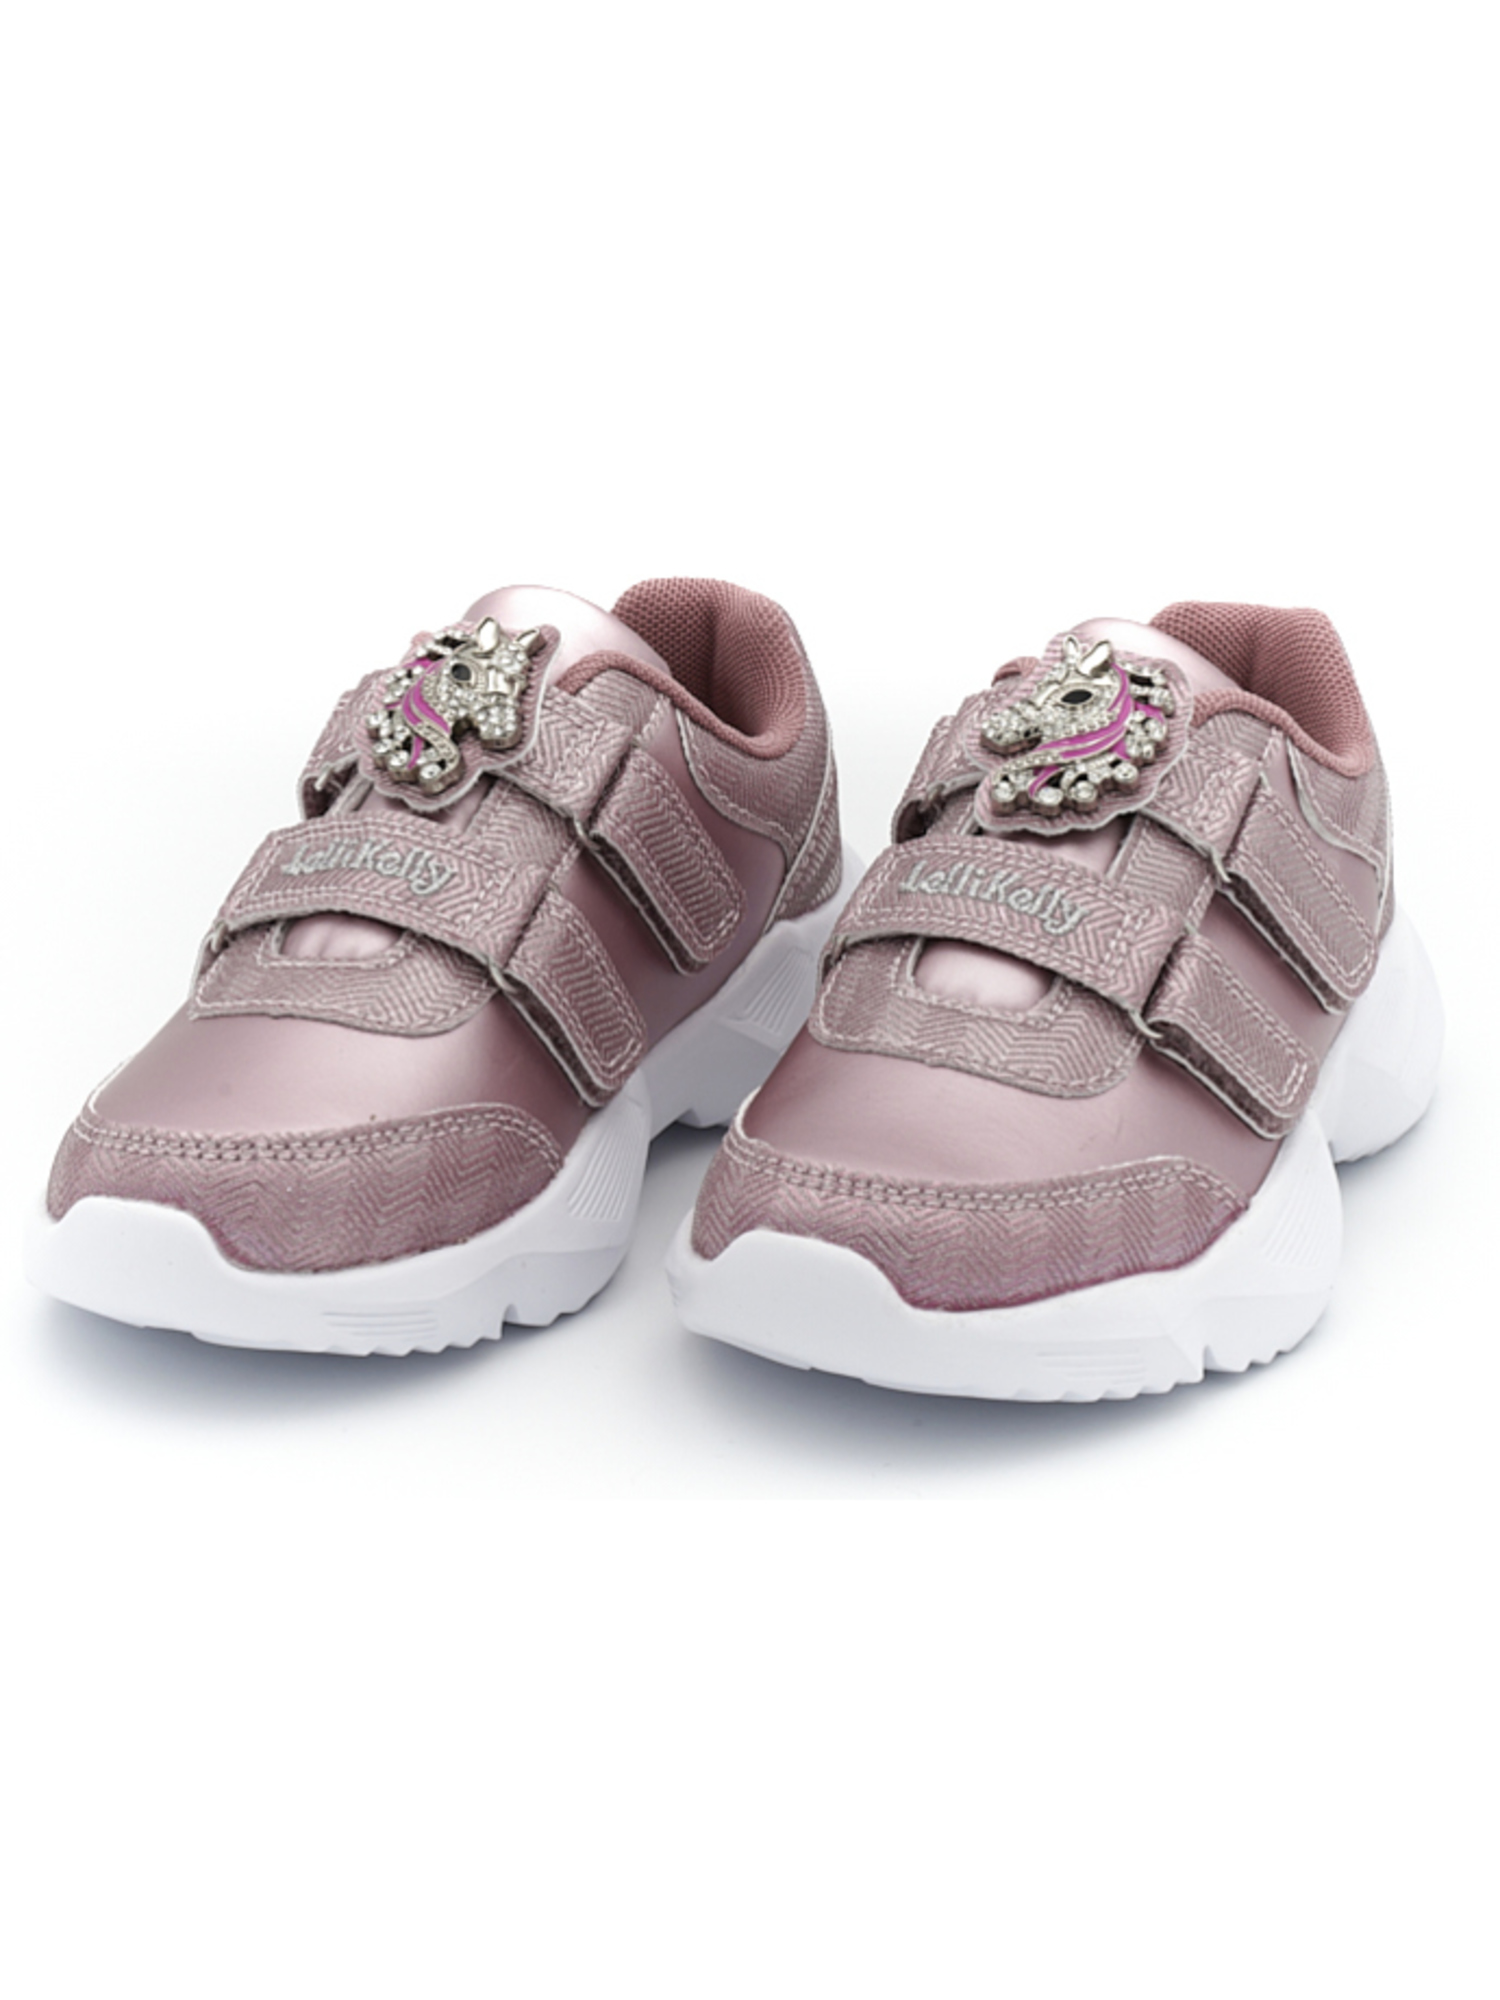 sneaker-unicorno-by-lelli-kelly-bambina-rosa-glitter